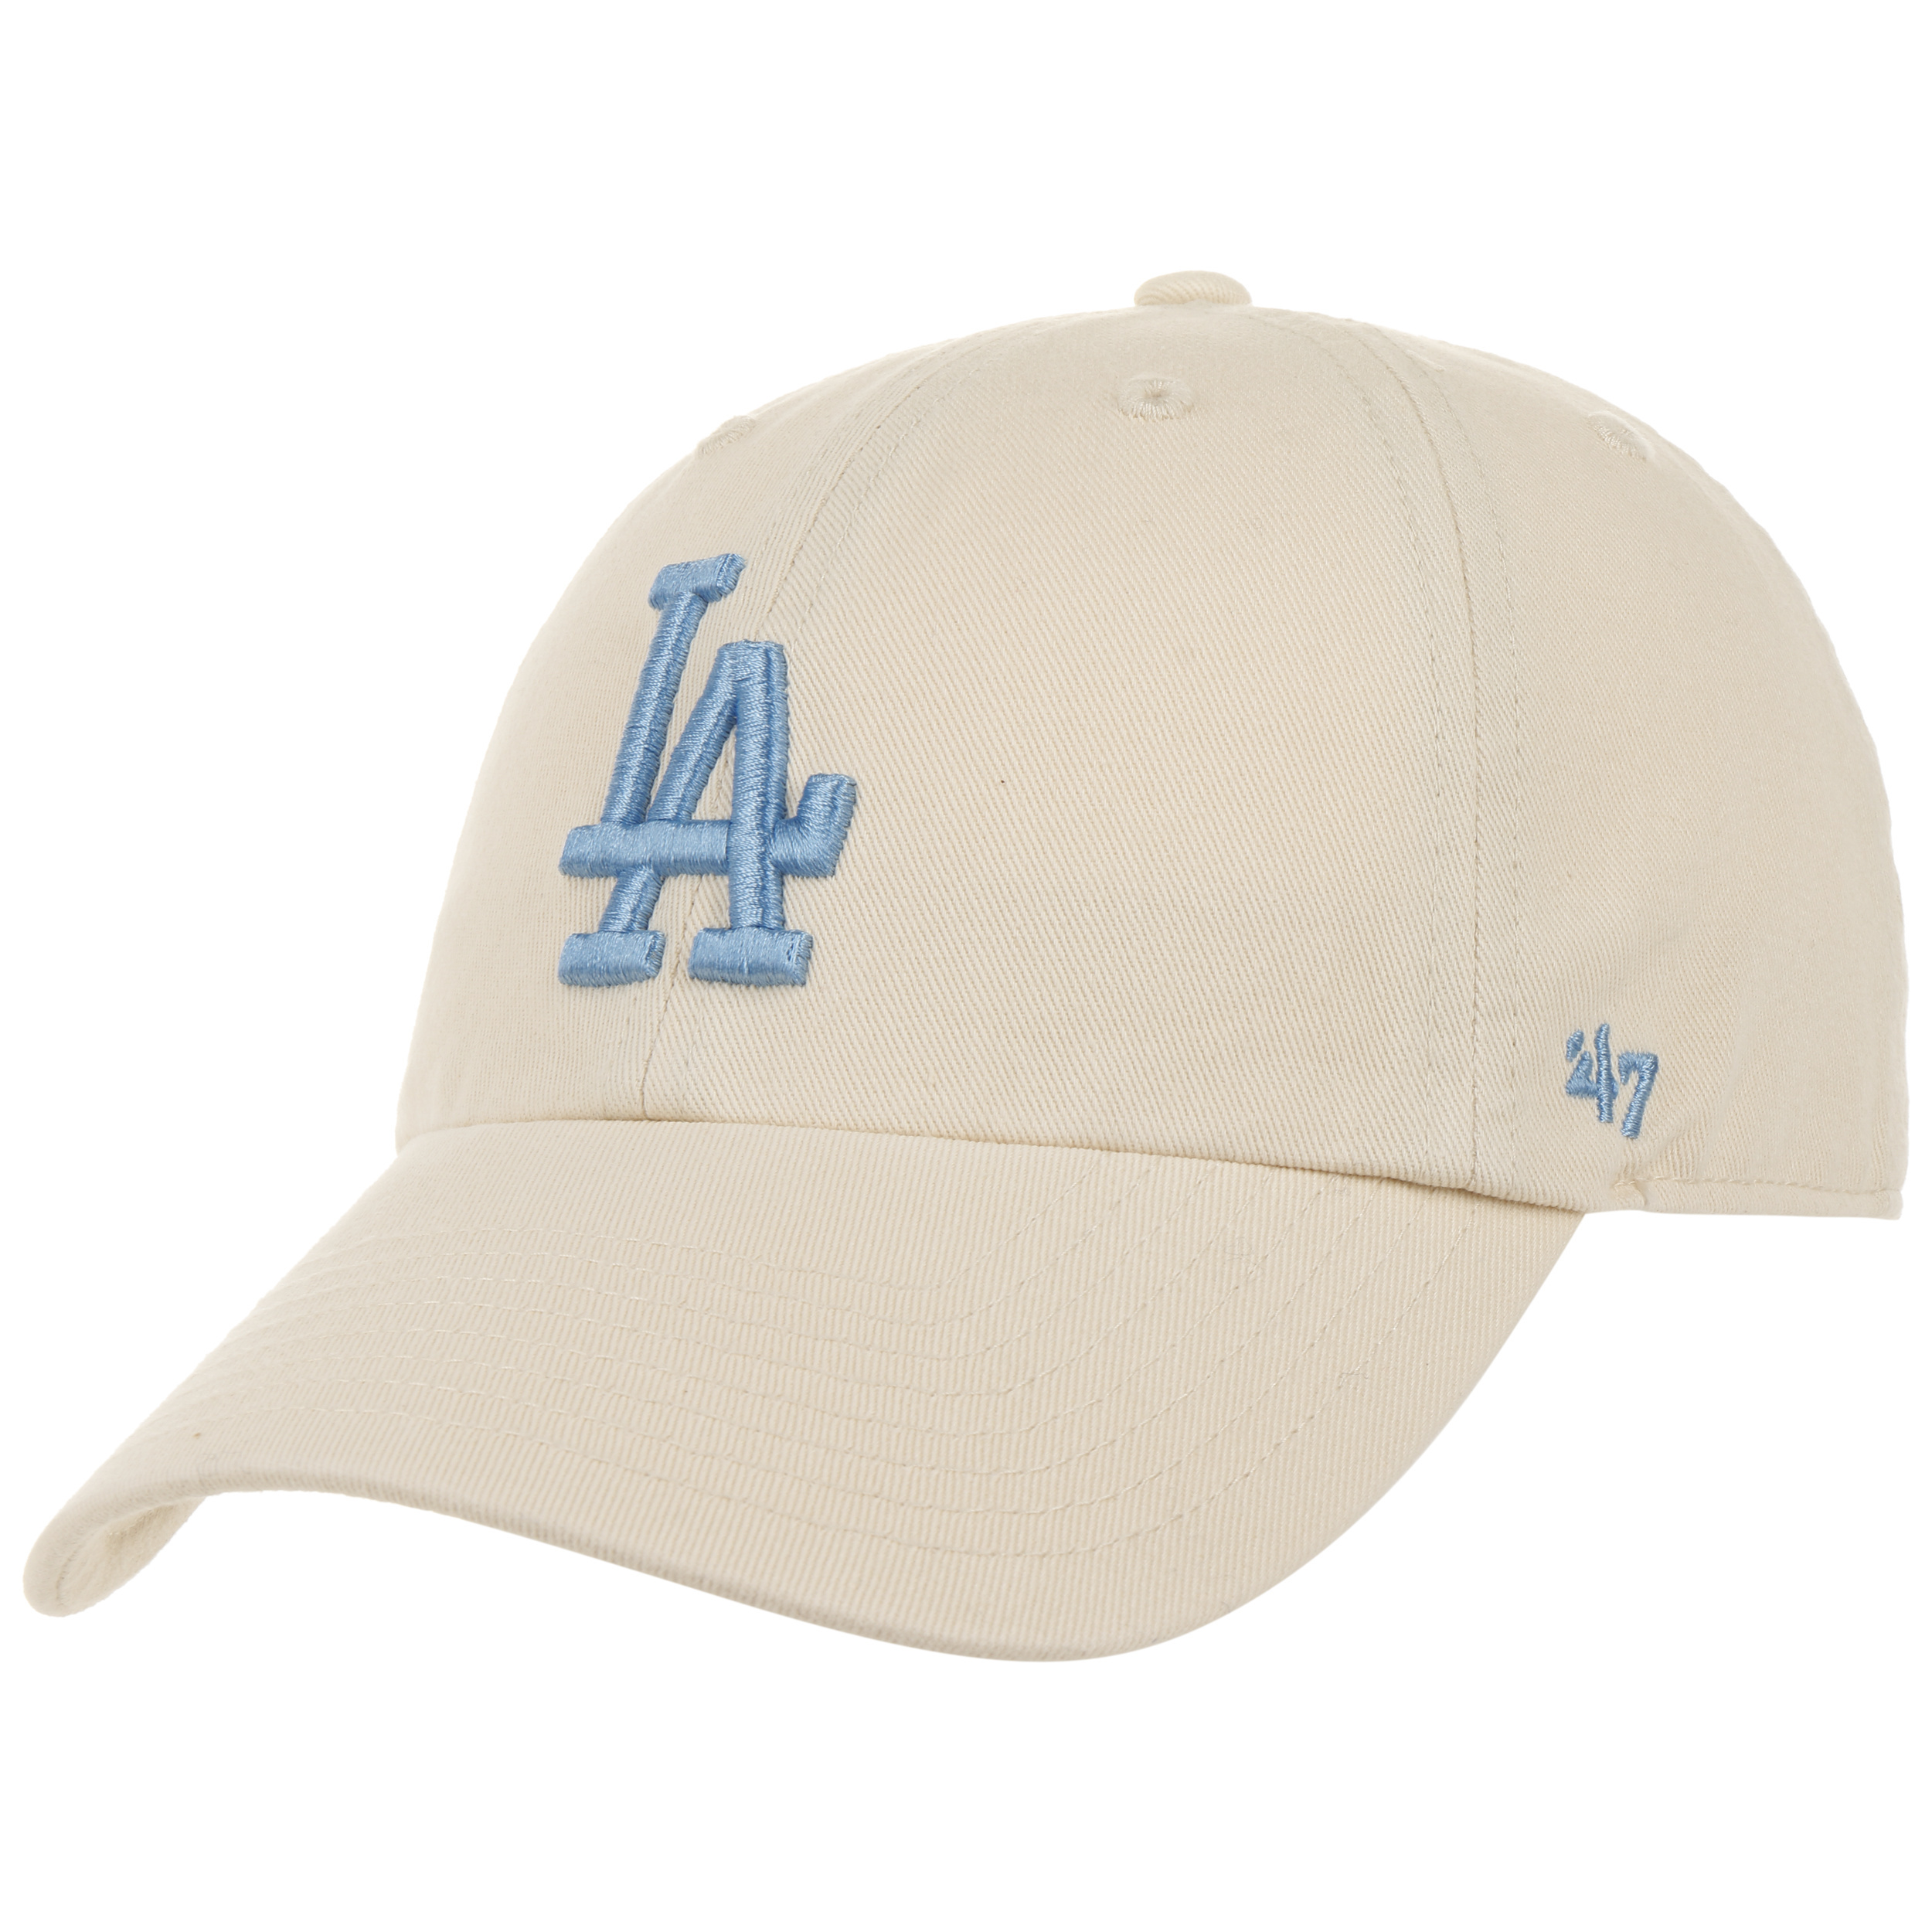 MLB Los Angeles Dodgers Alquippa Adjustable CapHat by Fan Favorite   Walmartcom